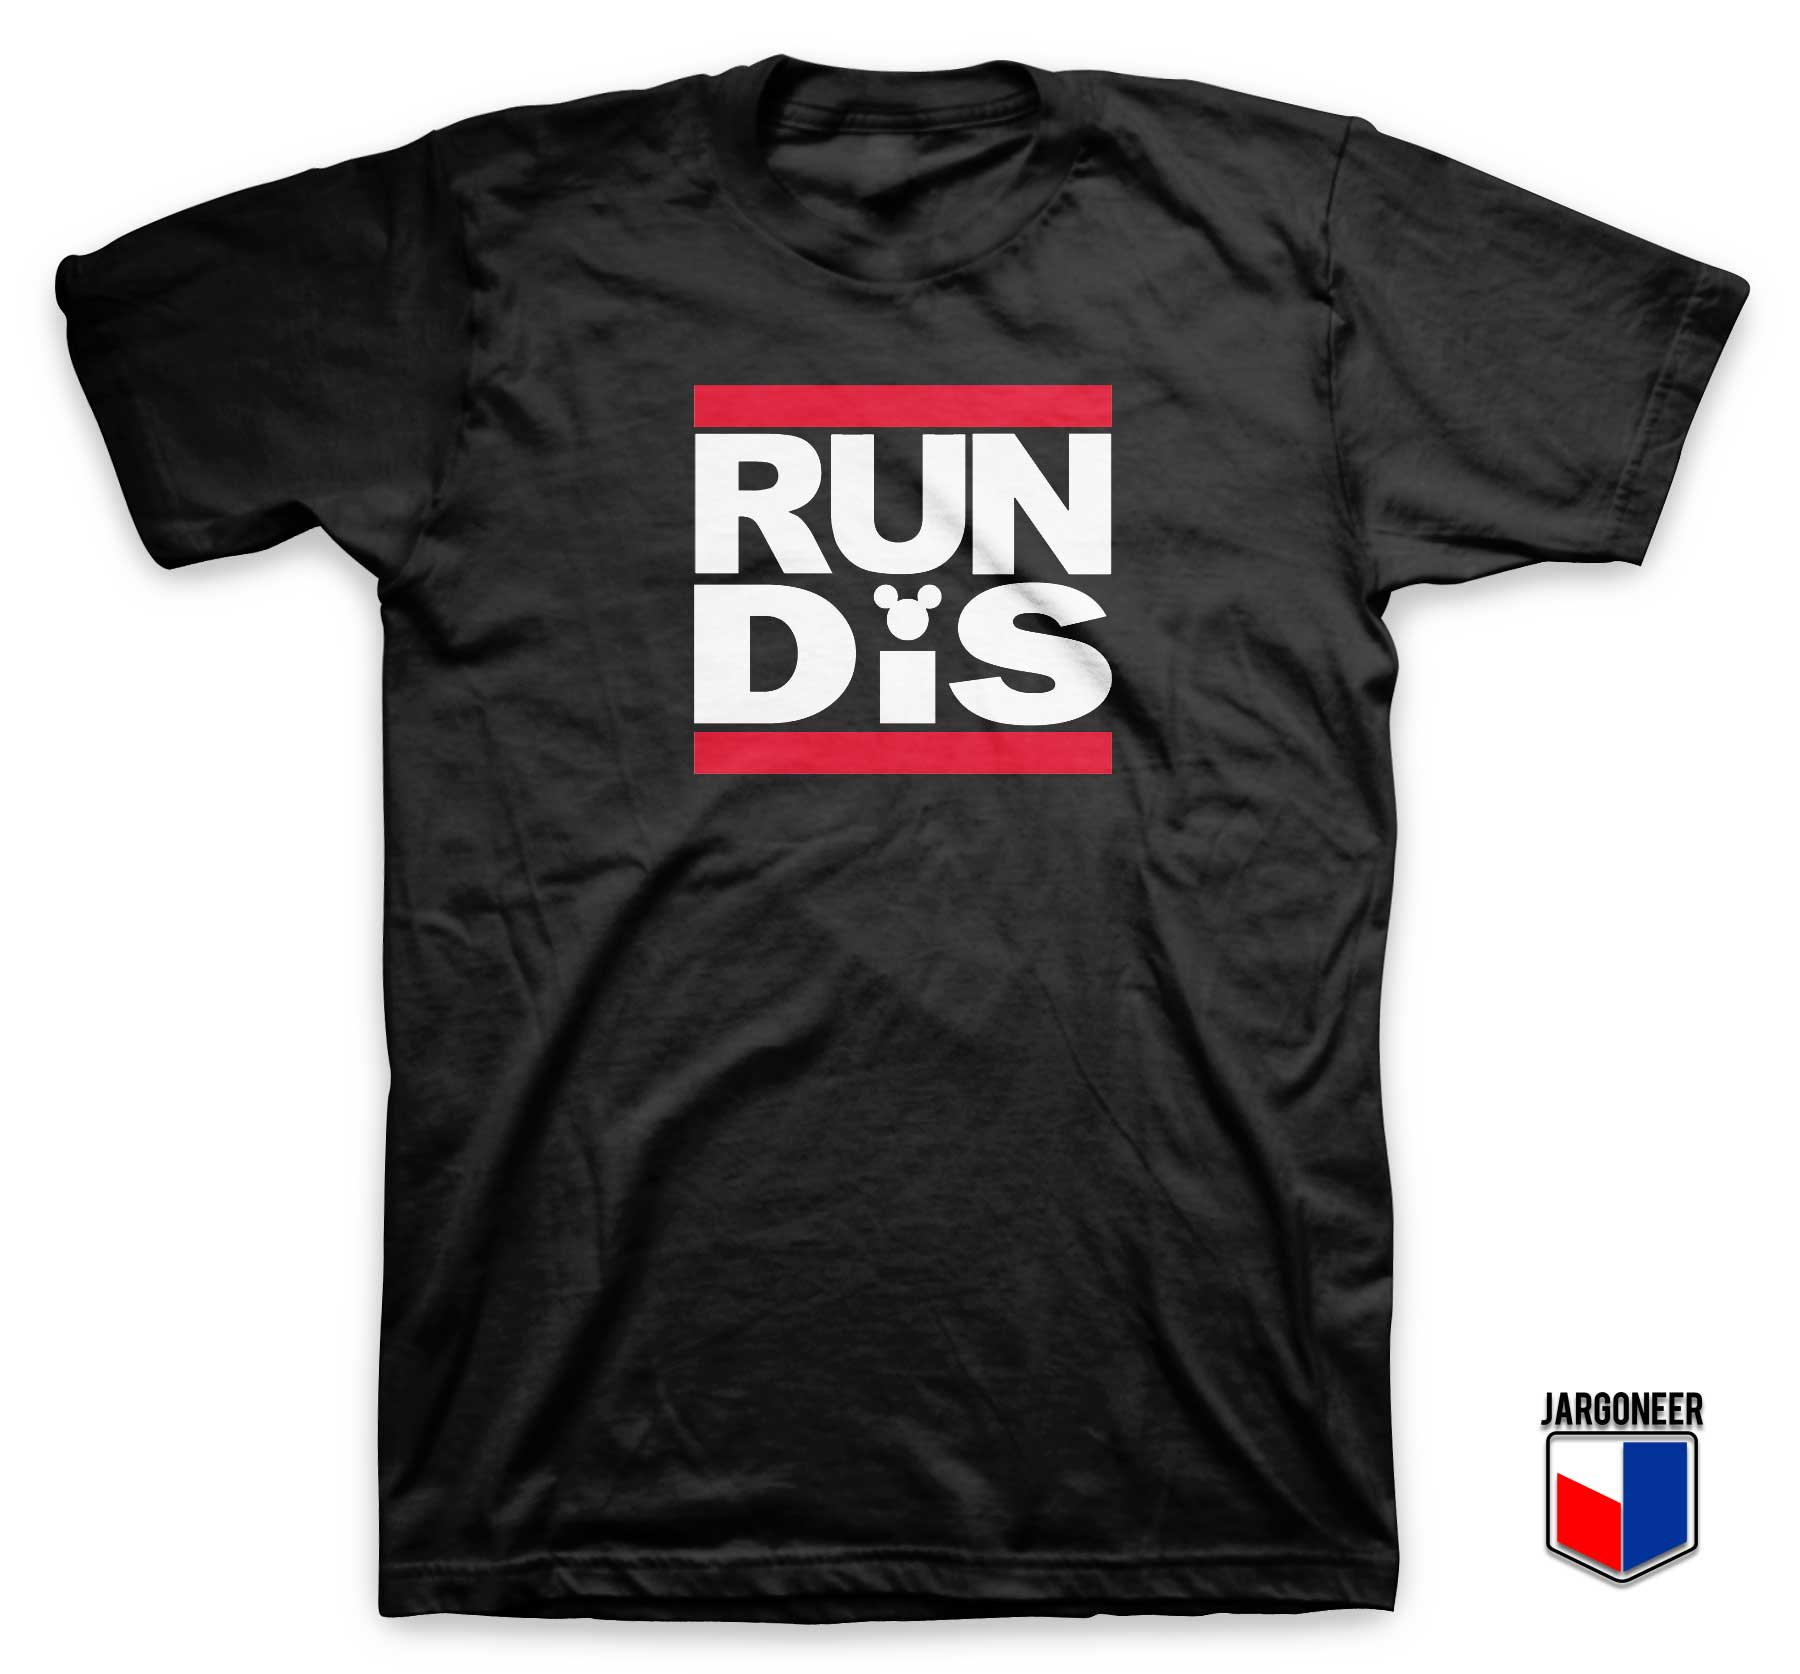 RUN DMC X Disney T Shirt - Shop Unique Graphic Cool Shirt Designs